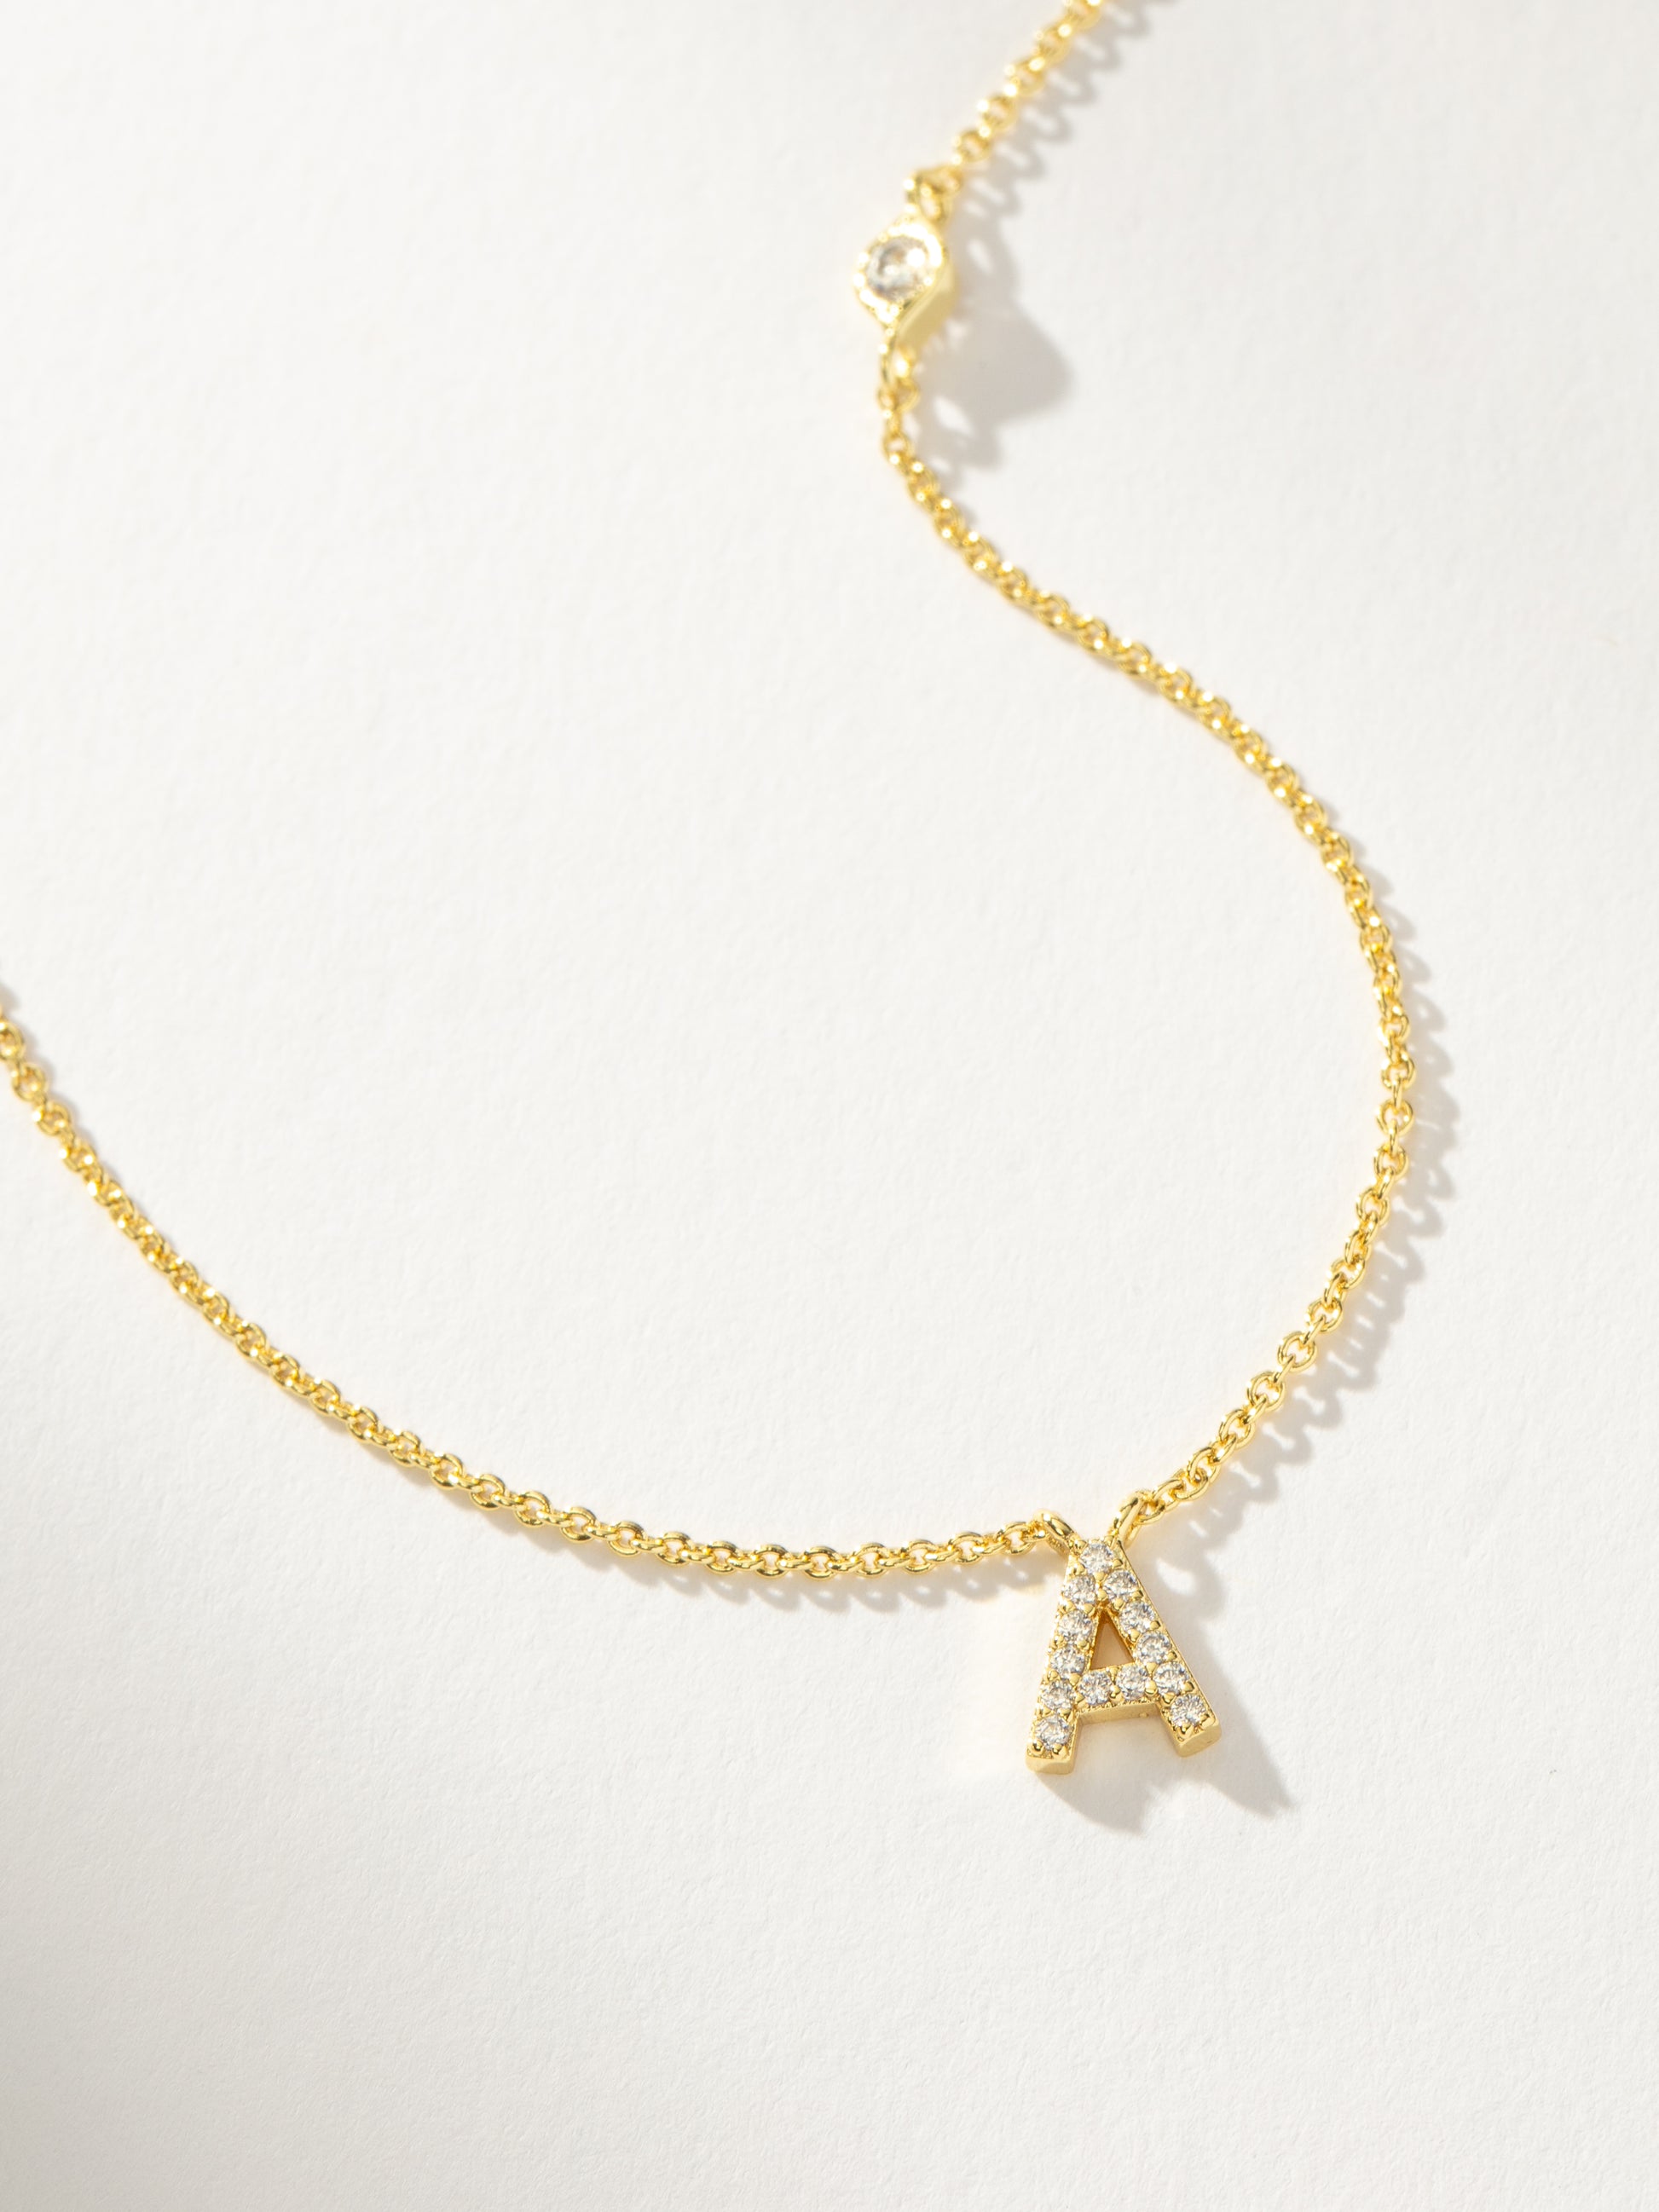 Pavé Initial Necklace | Gold A | Product Detail Image | Uncommon James